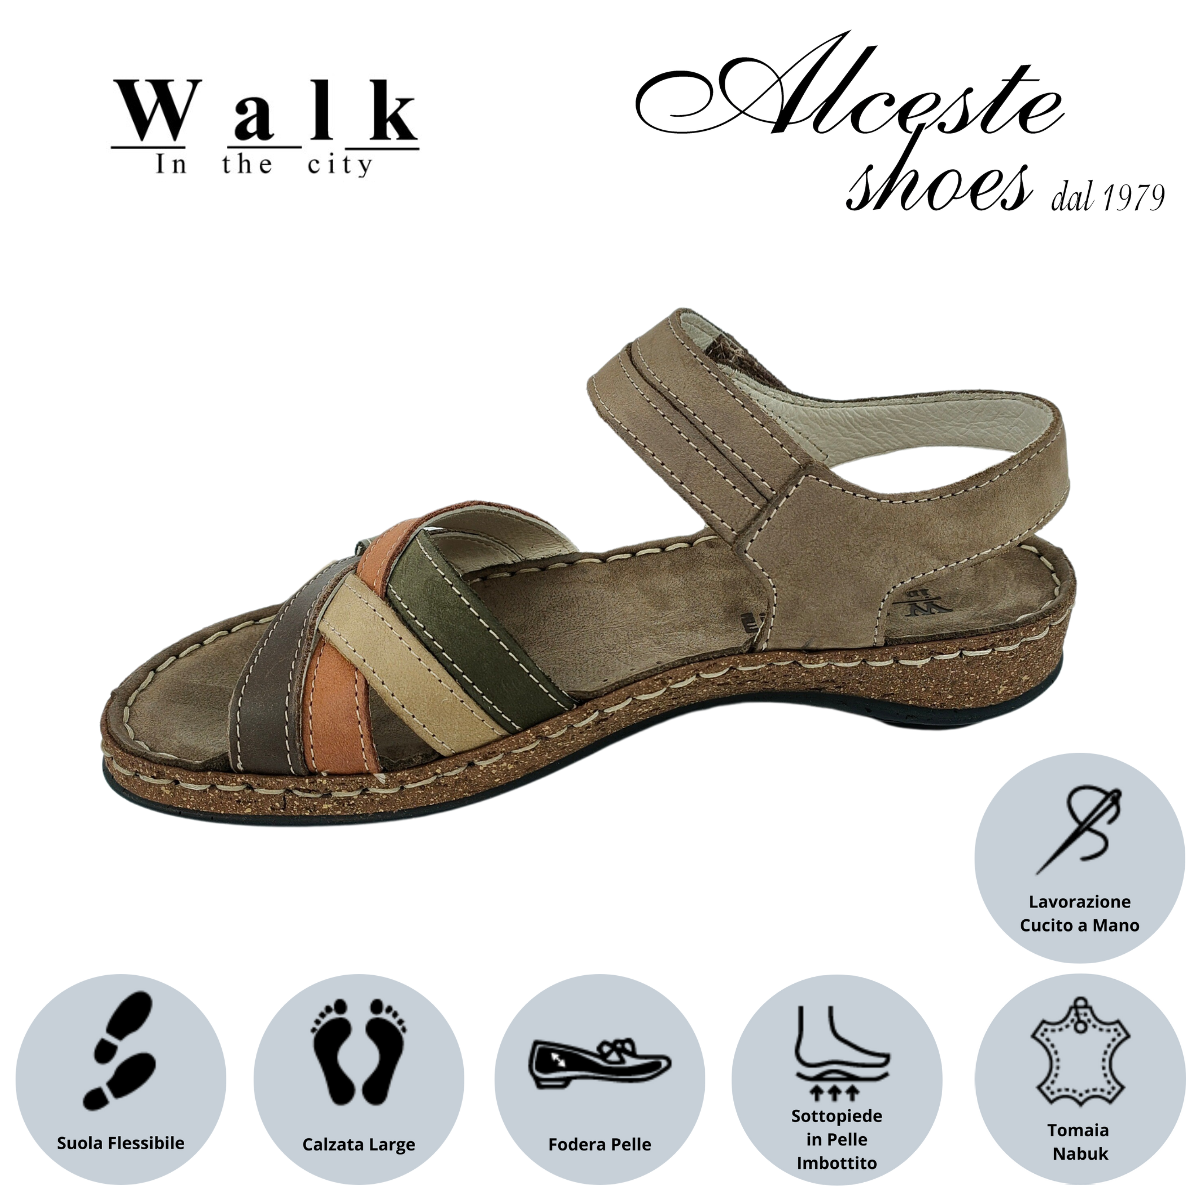 Sandalo Donna Cinturino con Velcro "Walk in The City" Art. 43170 Nabuk Fango e Testa di Moro Alceste Shoes 15